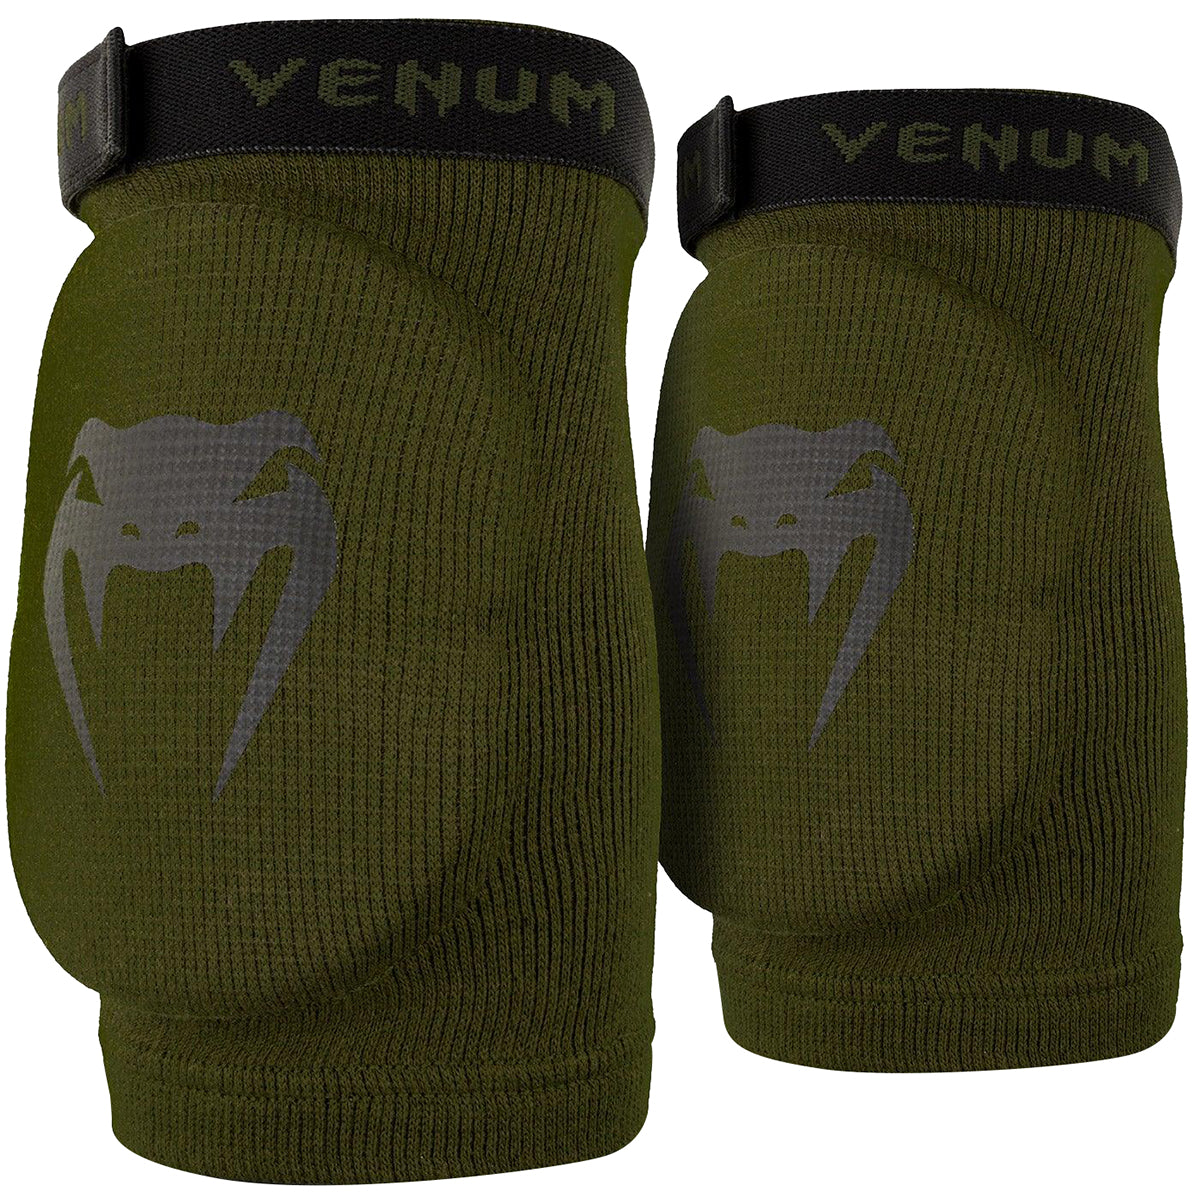 Venum Kontact Protective Elbow Guards - Khaki/Black Venum